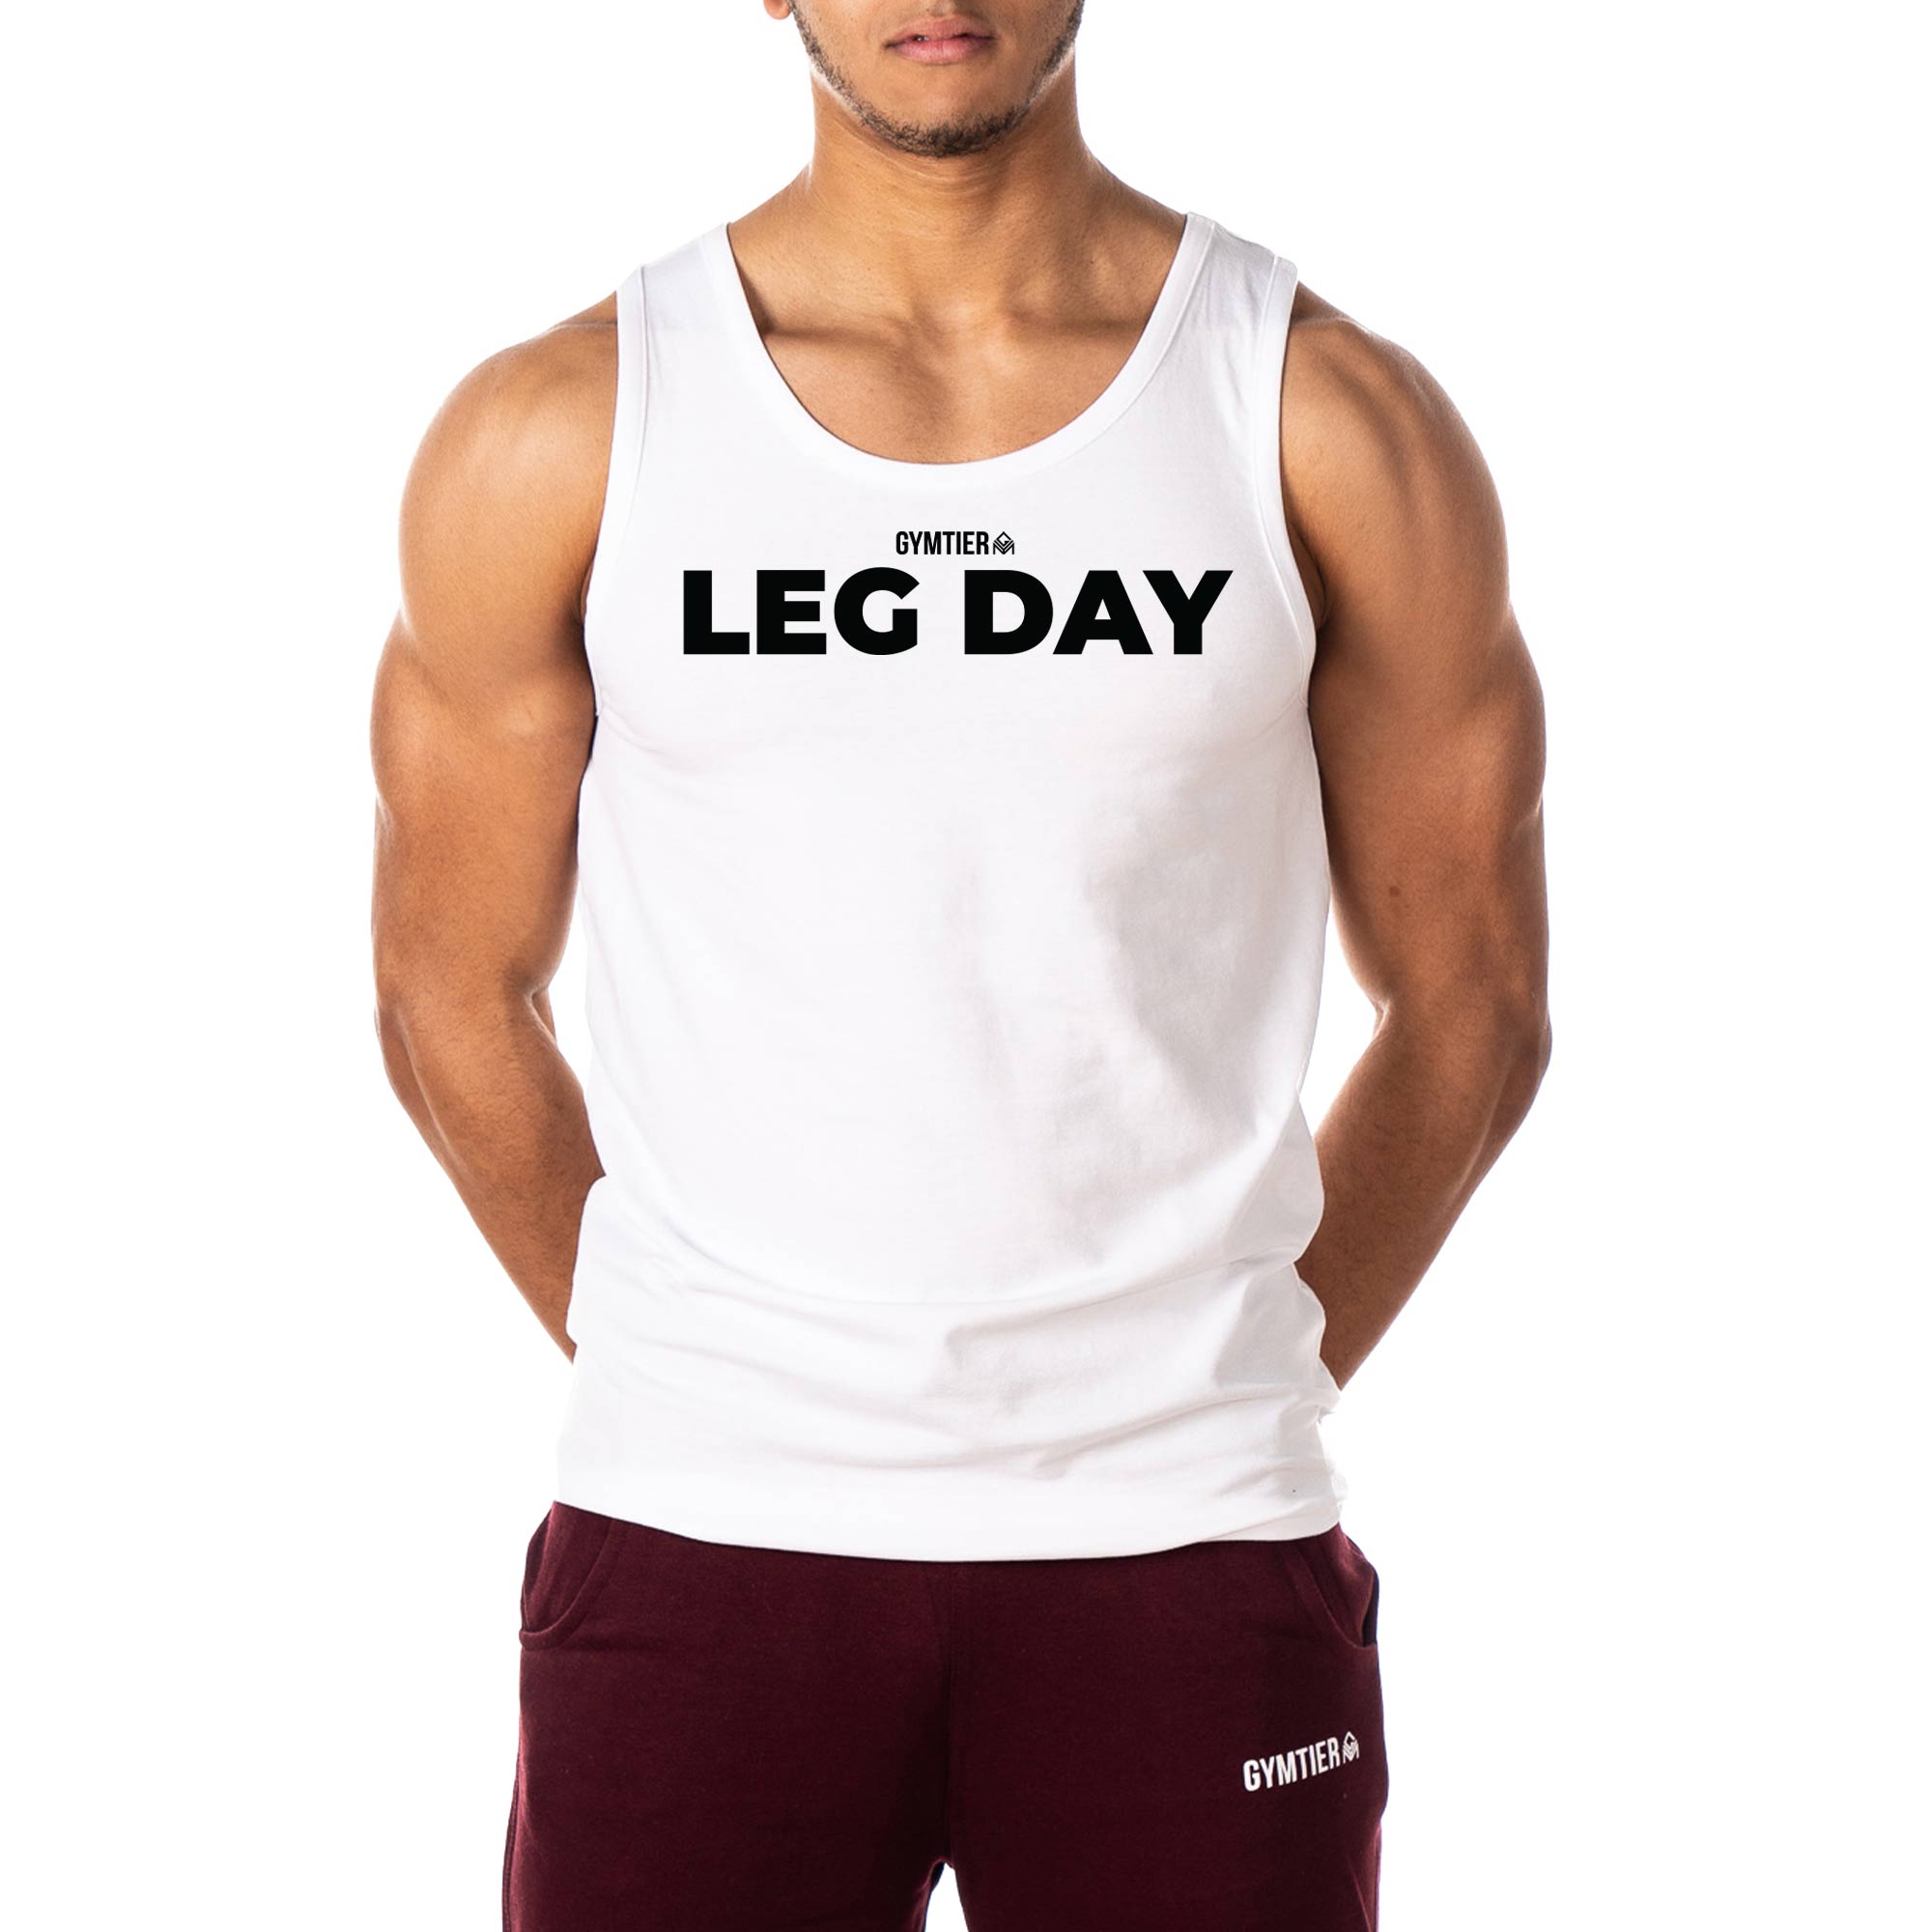 GYMTIER Leg Day Gym Vest